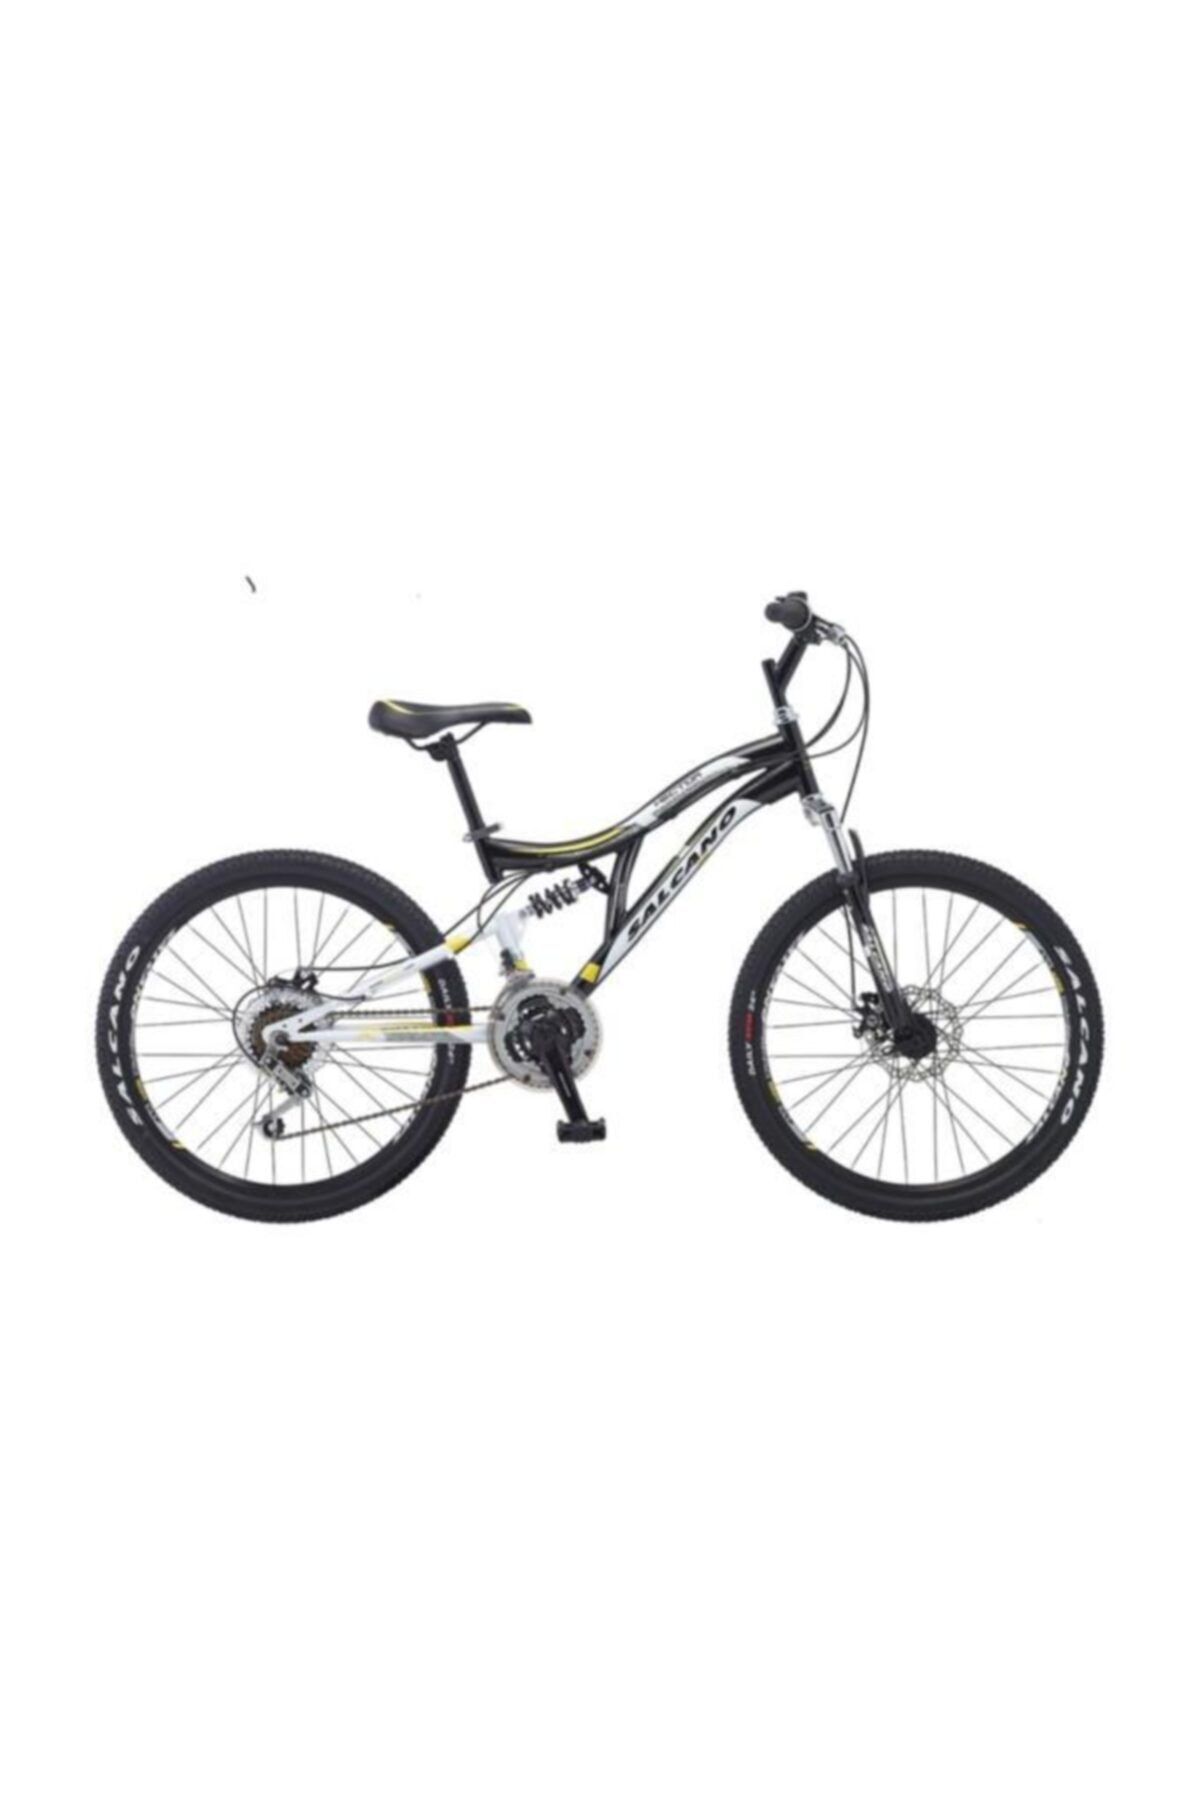 Salcano Hector Md 21 Vites 24 Jant Bisiklet 2018 Model E23 Beyaz Siyah Kırmızı Siyah 041446